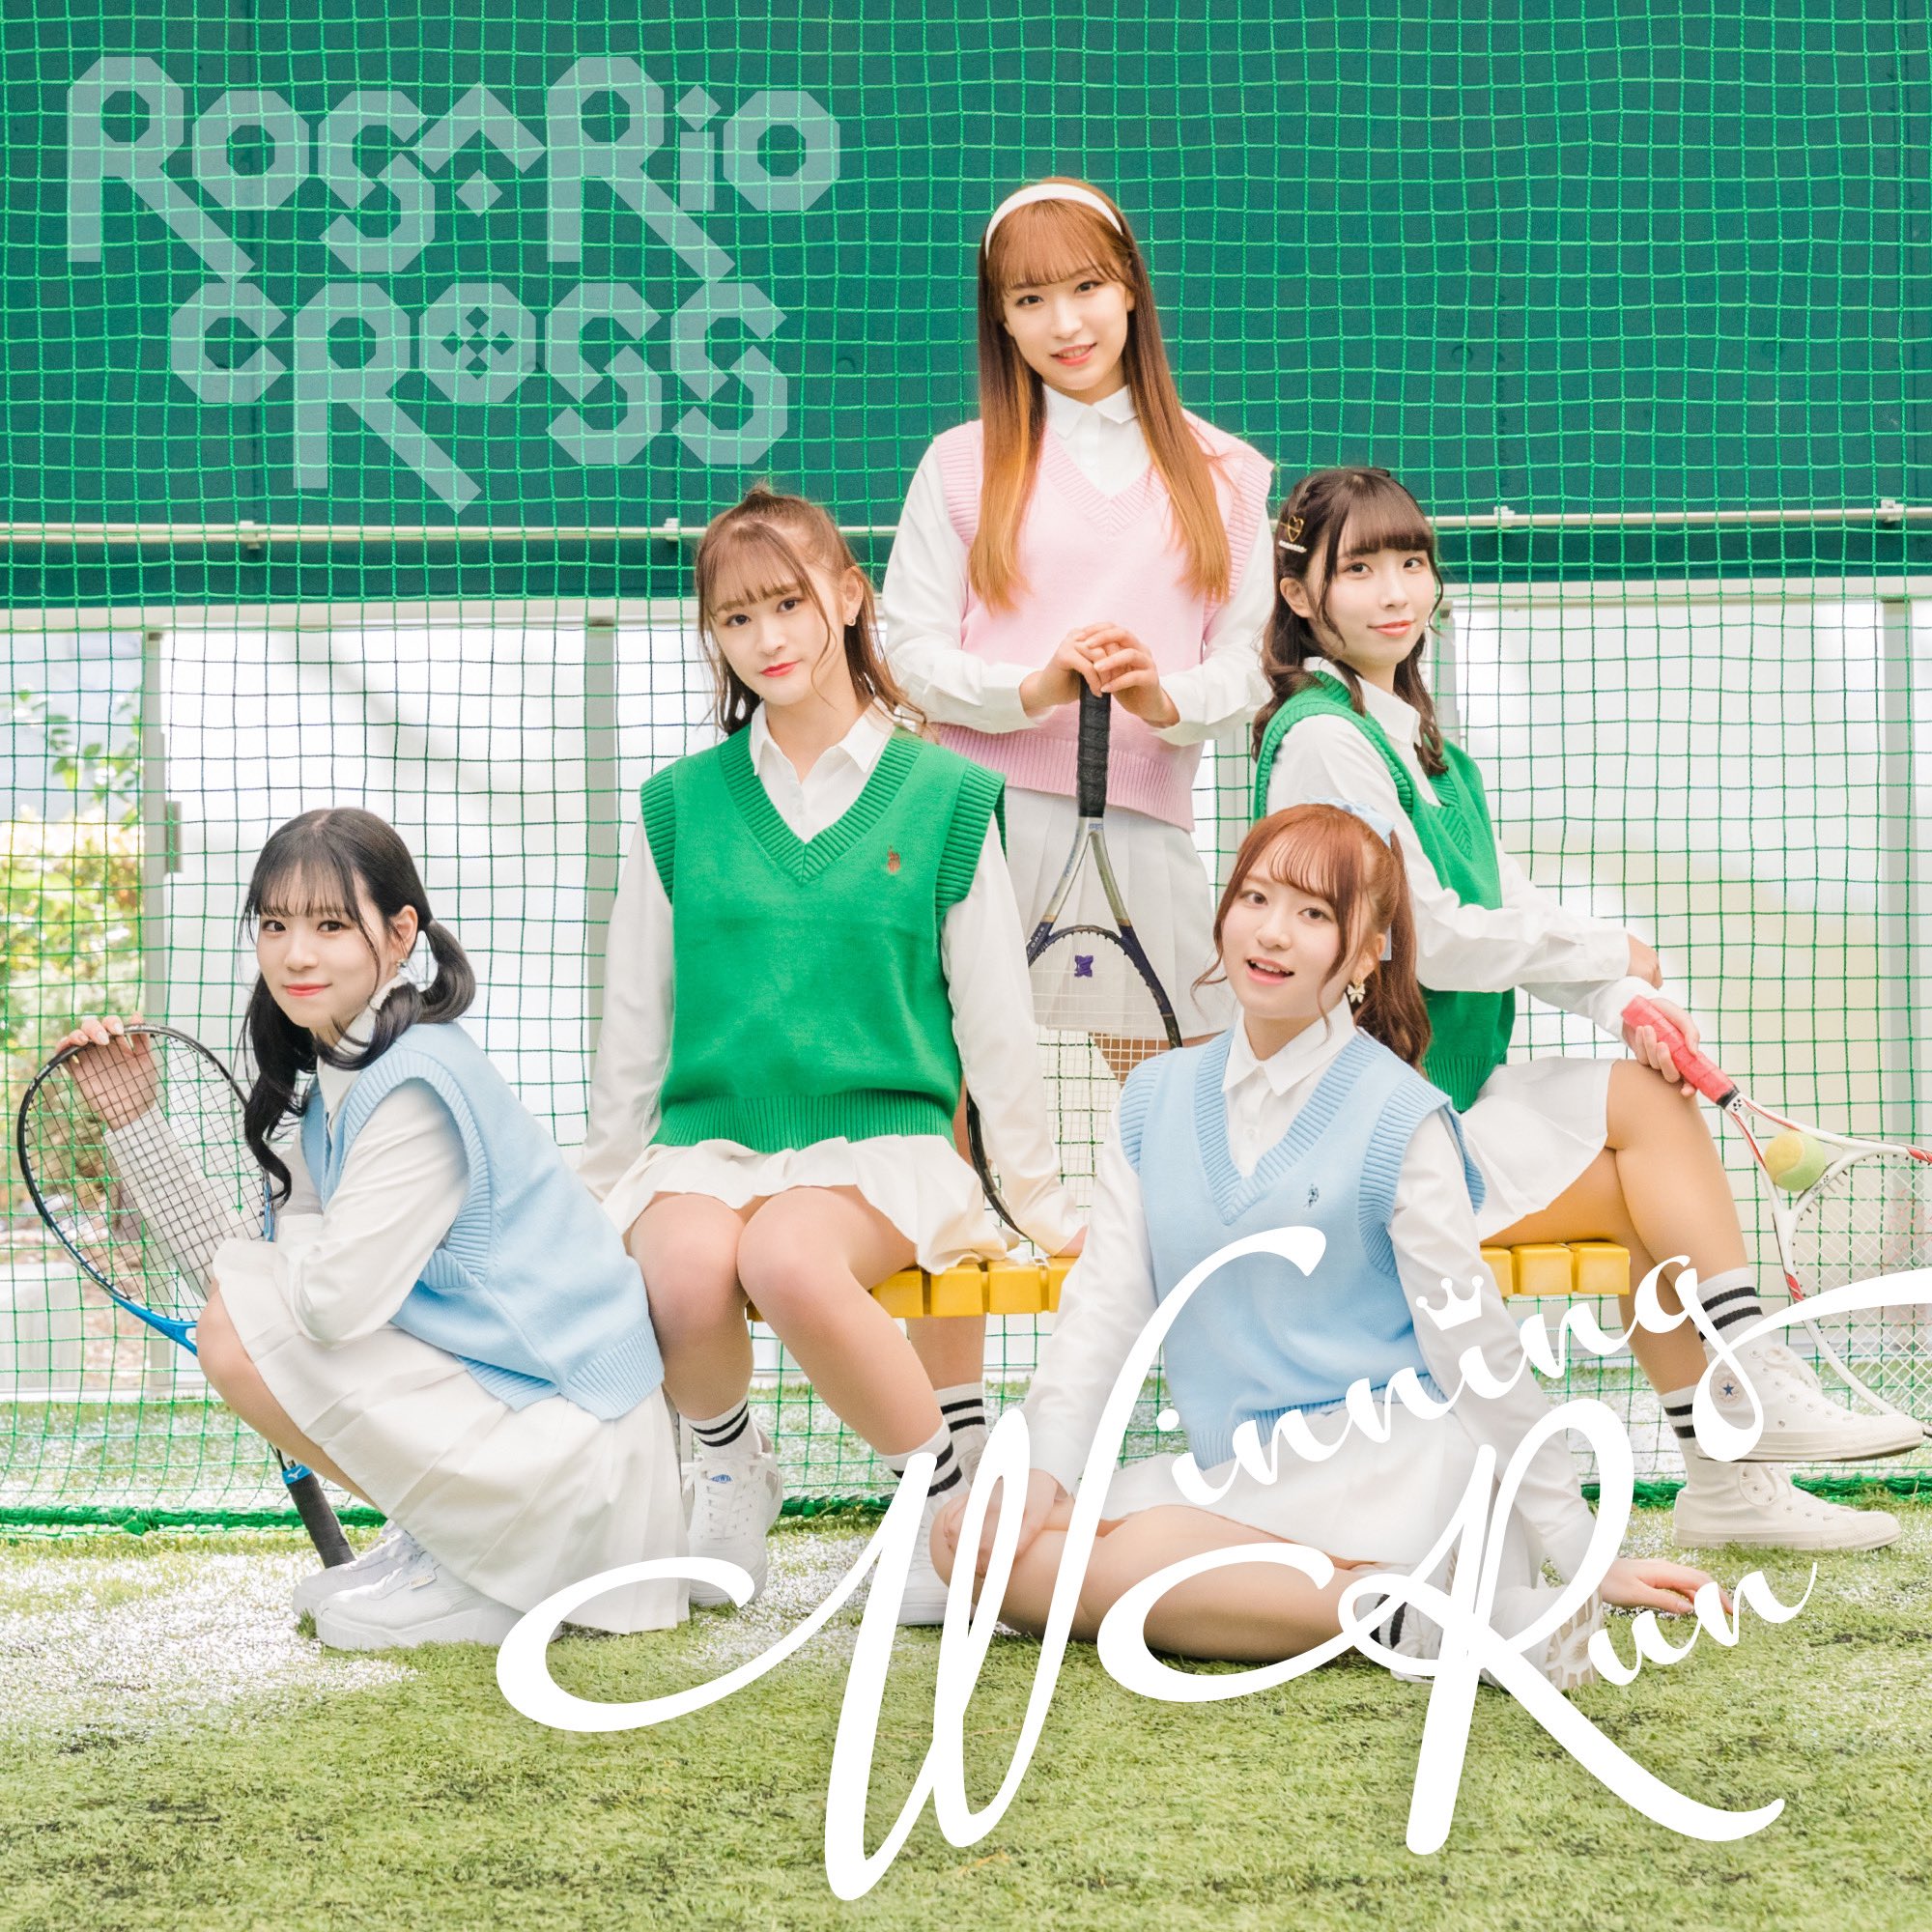 miuzic Entertainment 静岡 on Twitter: "【オンラインショップ情報】 ROSARIO+CROSS 2nd